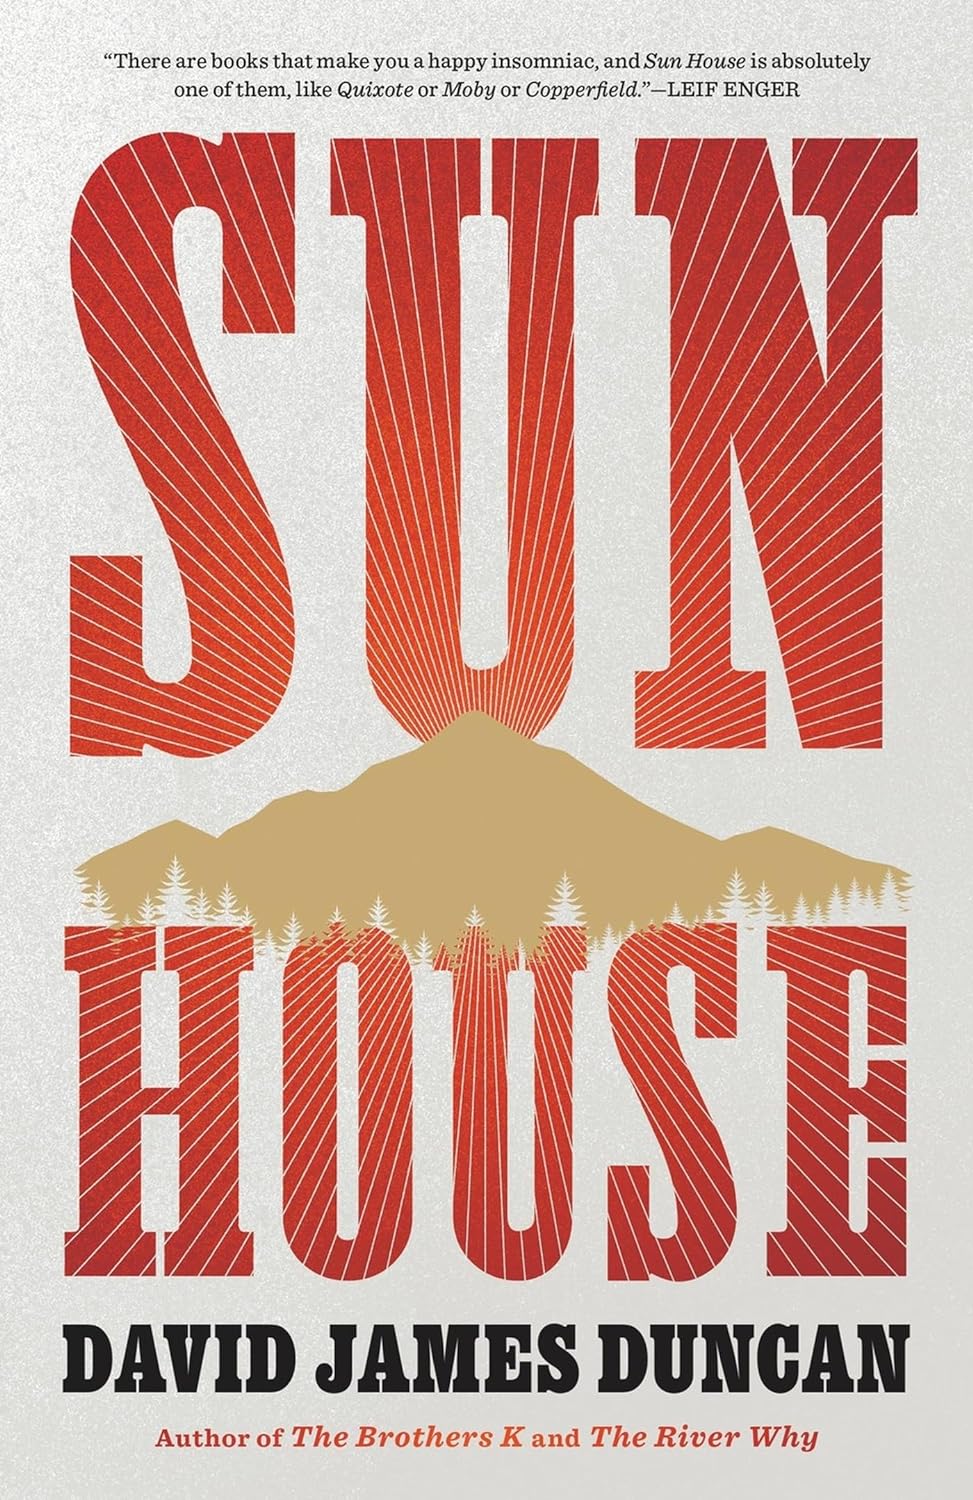 Sun House by David James Duncan